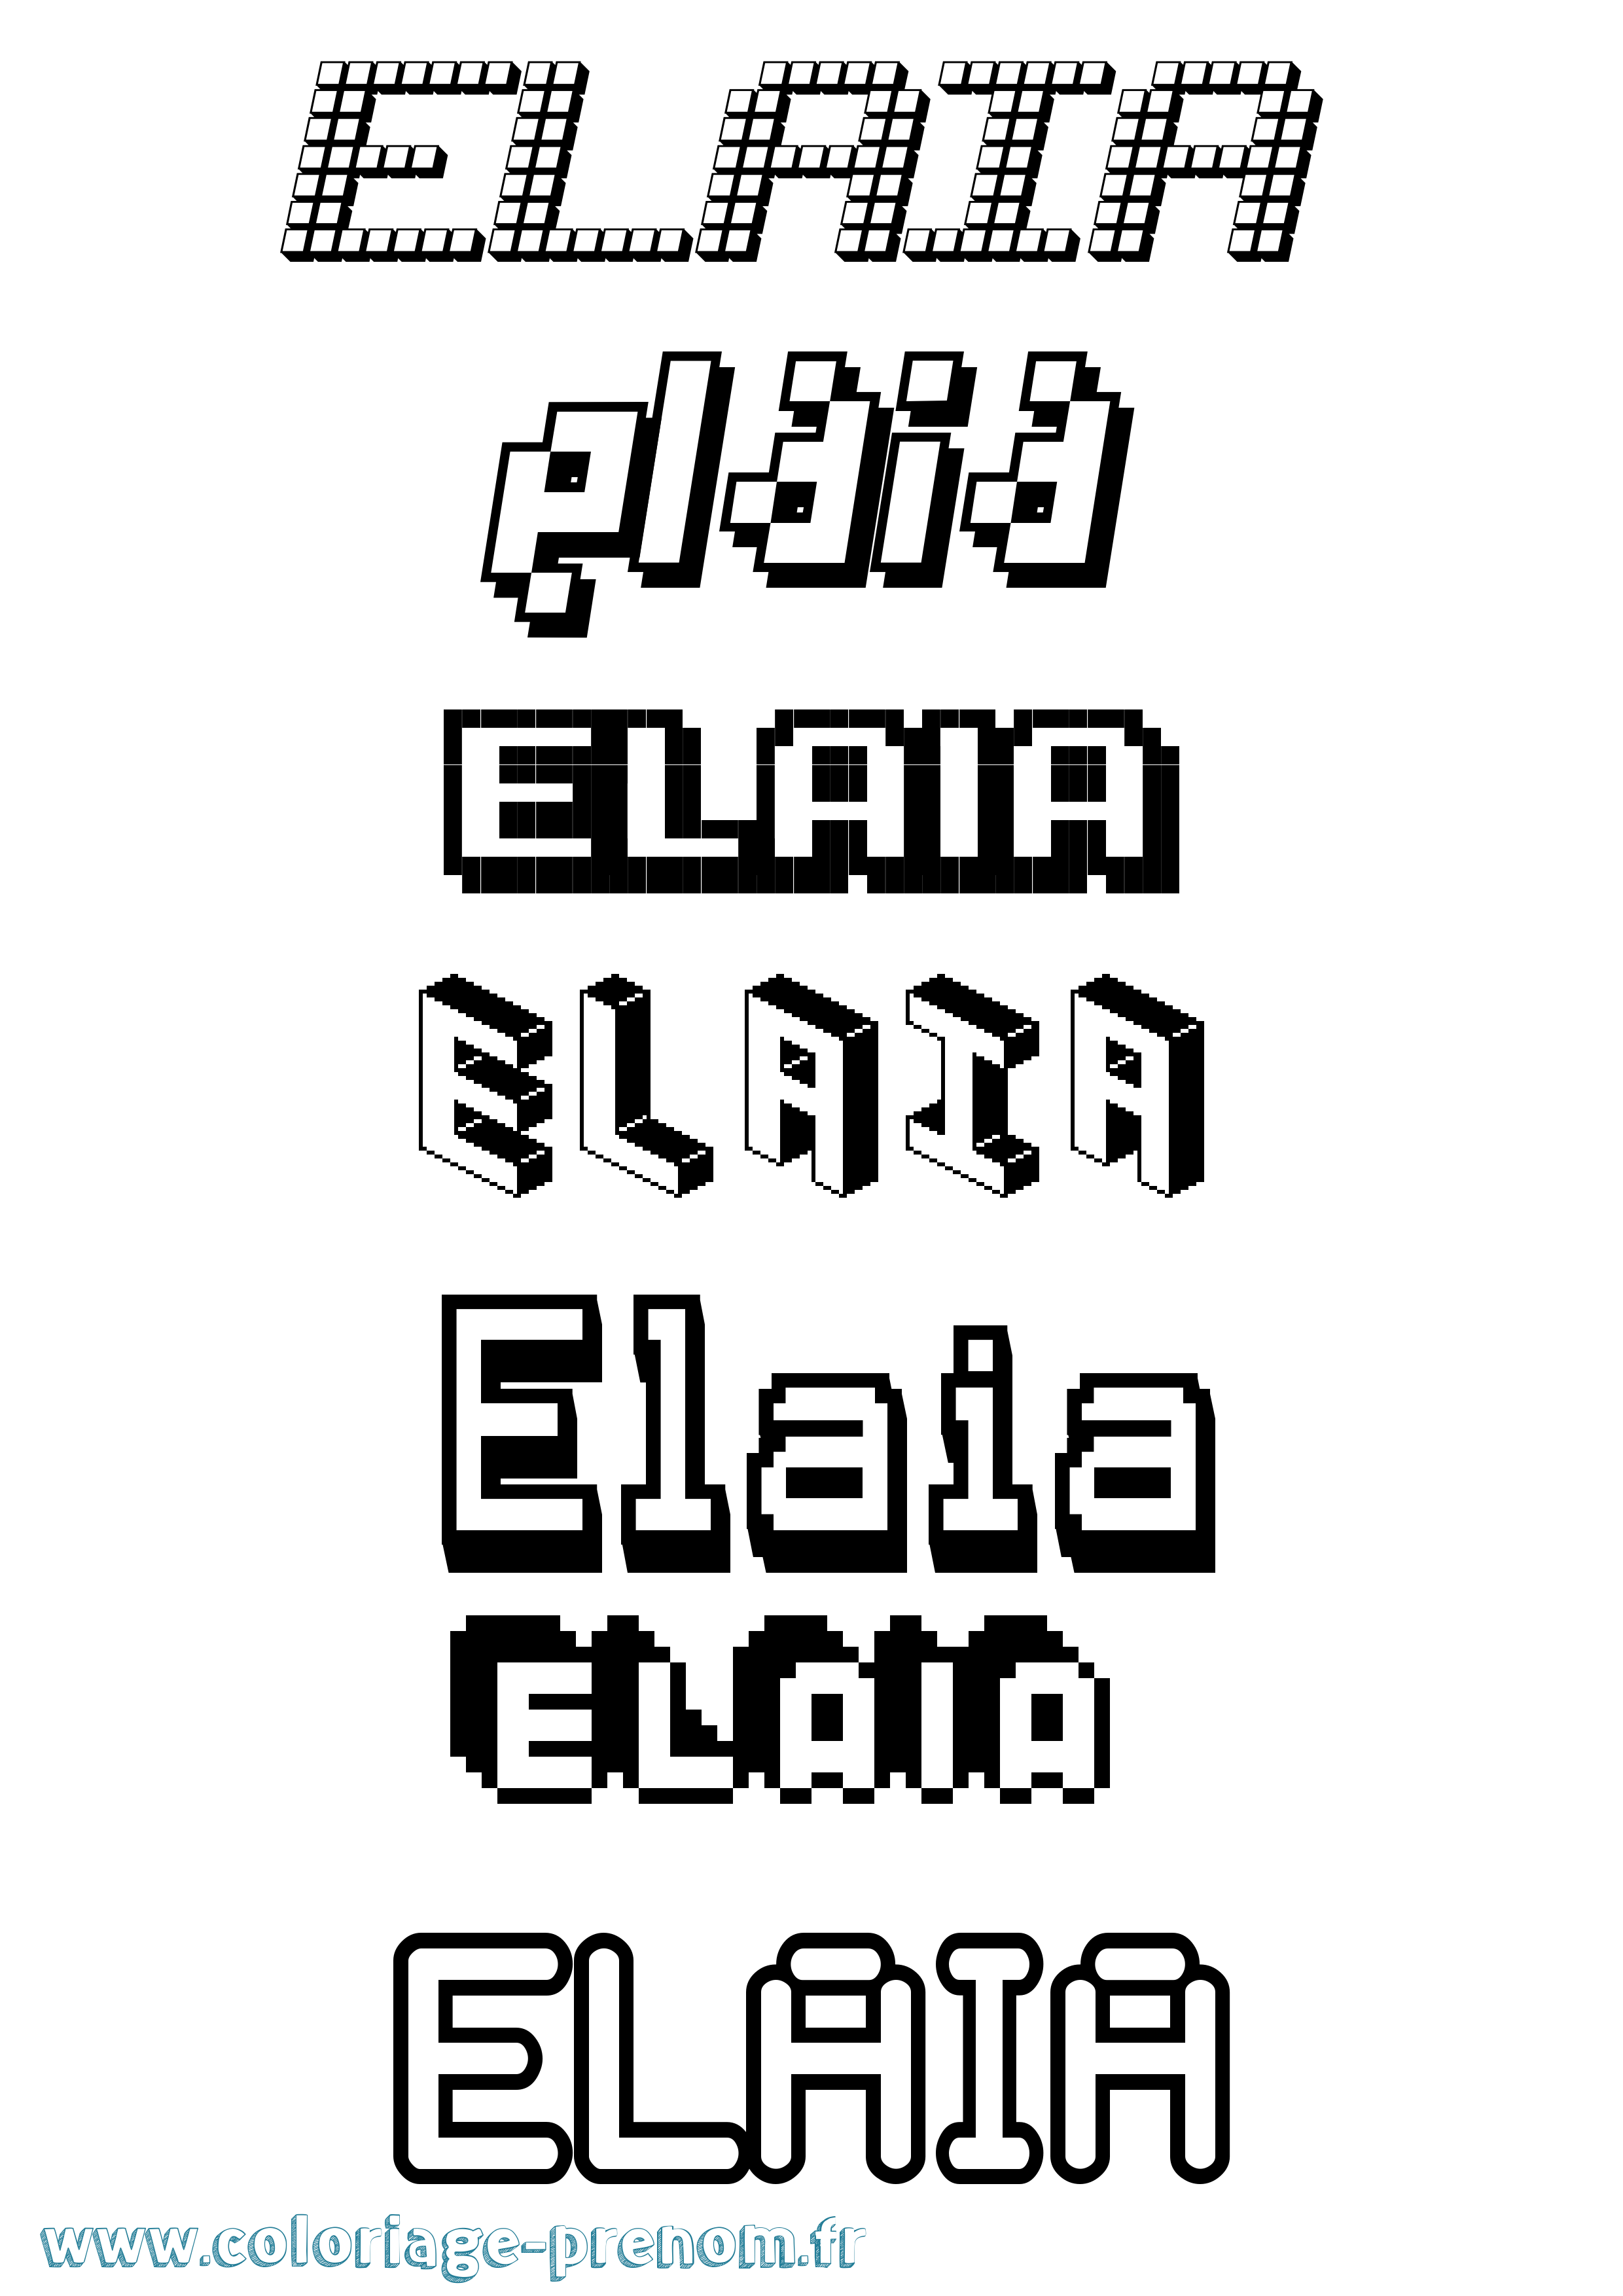 Coloriage prénom Elaia Pixel